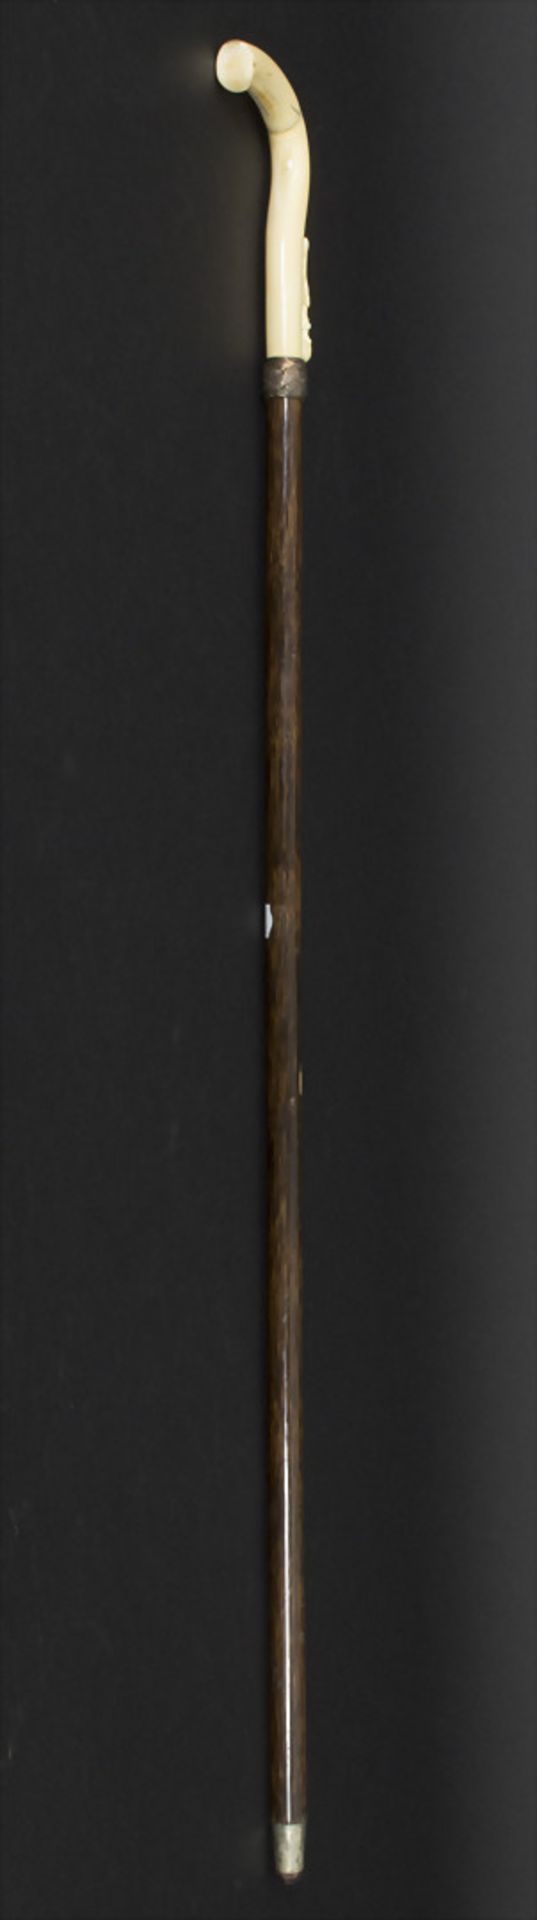 Gehstock mit Figurengriff 'Weintrinker' / A cane with figural handle 'Wine drinker', um - Image 6 of 6